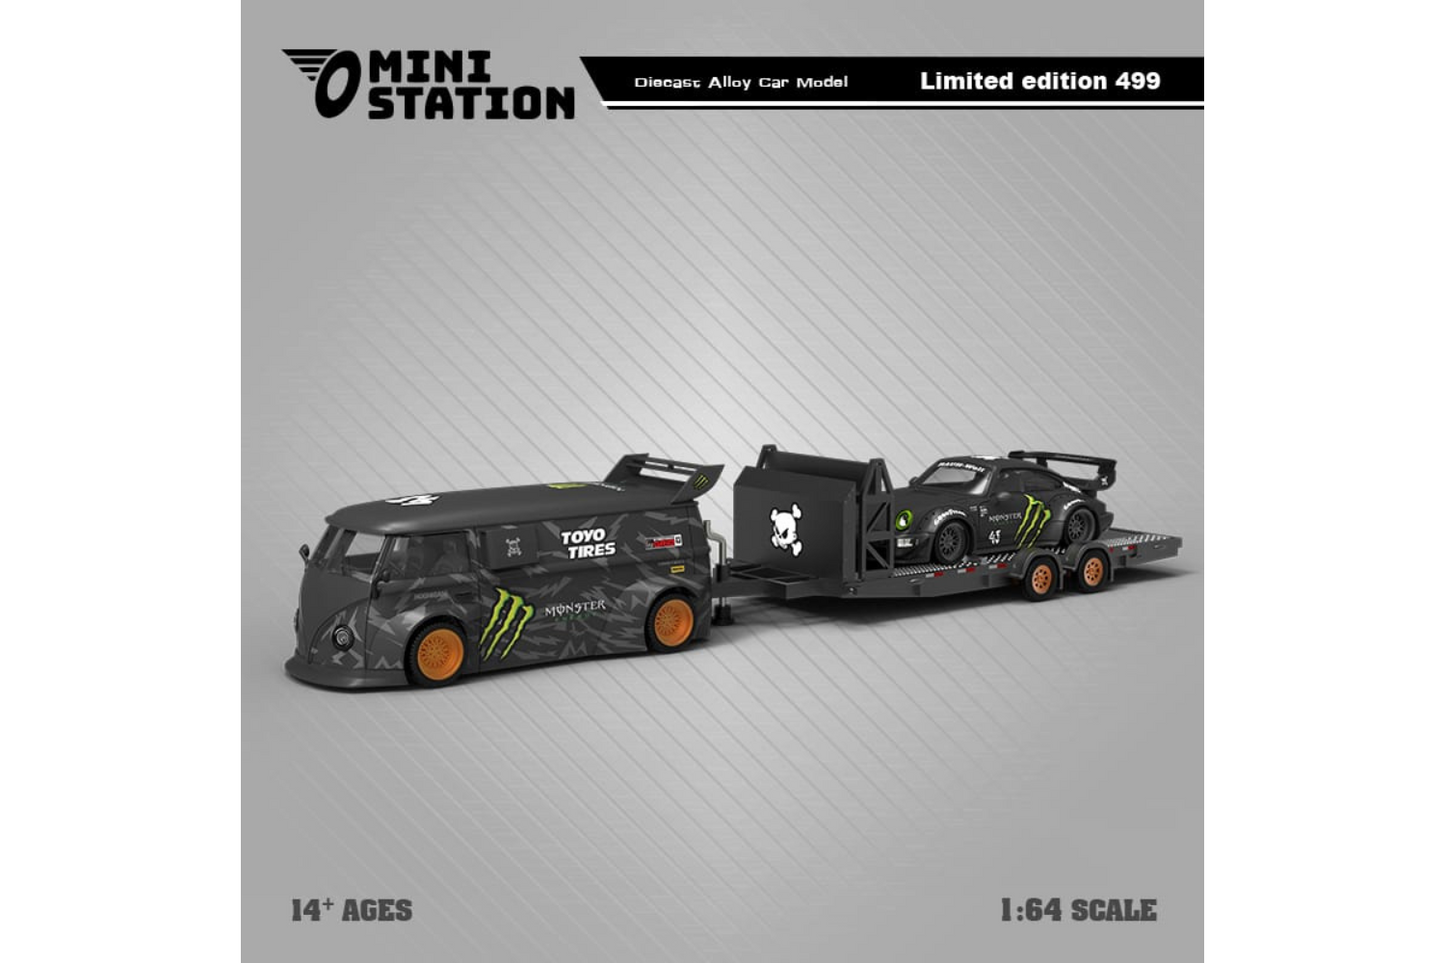 Mini Station 1/64 RWB VW T1 Van and Porsche 911 RWB964 Trailer Set in Monster Livery